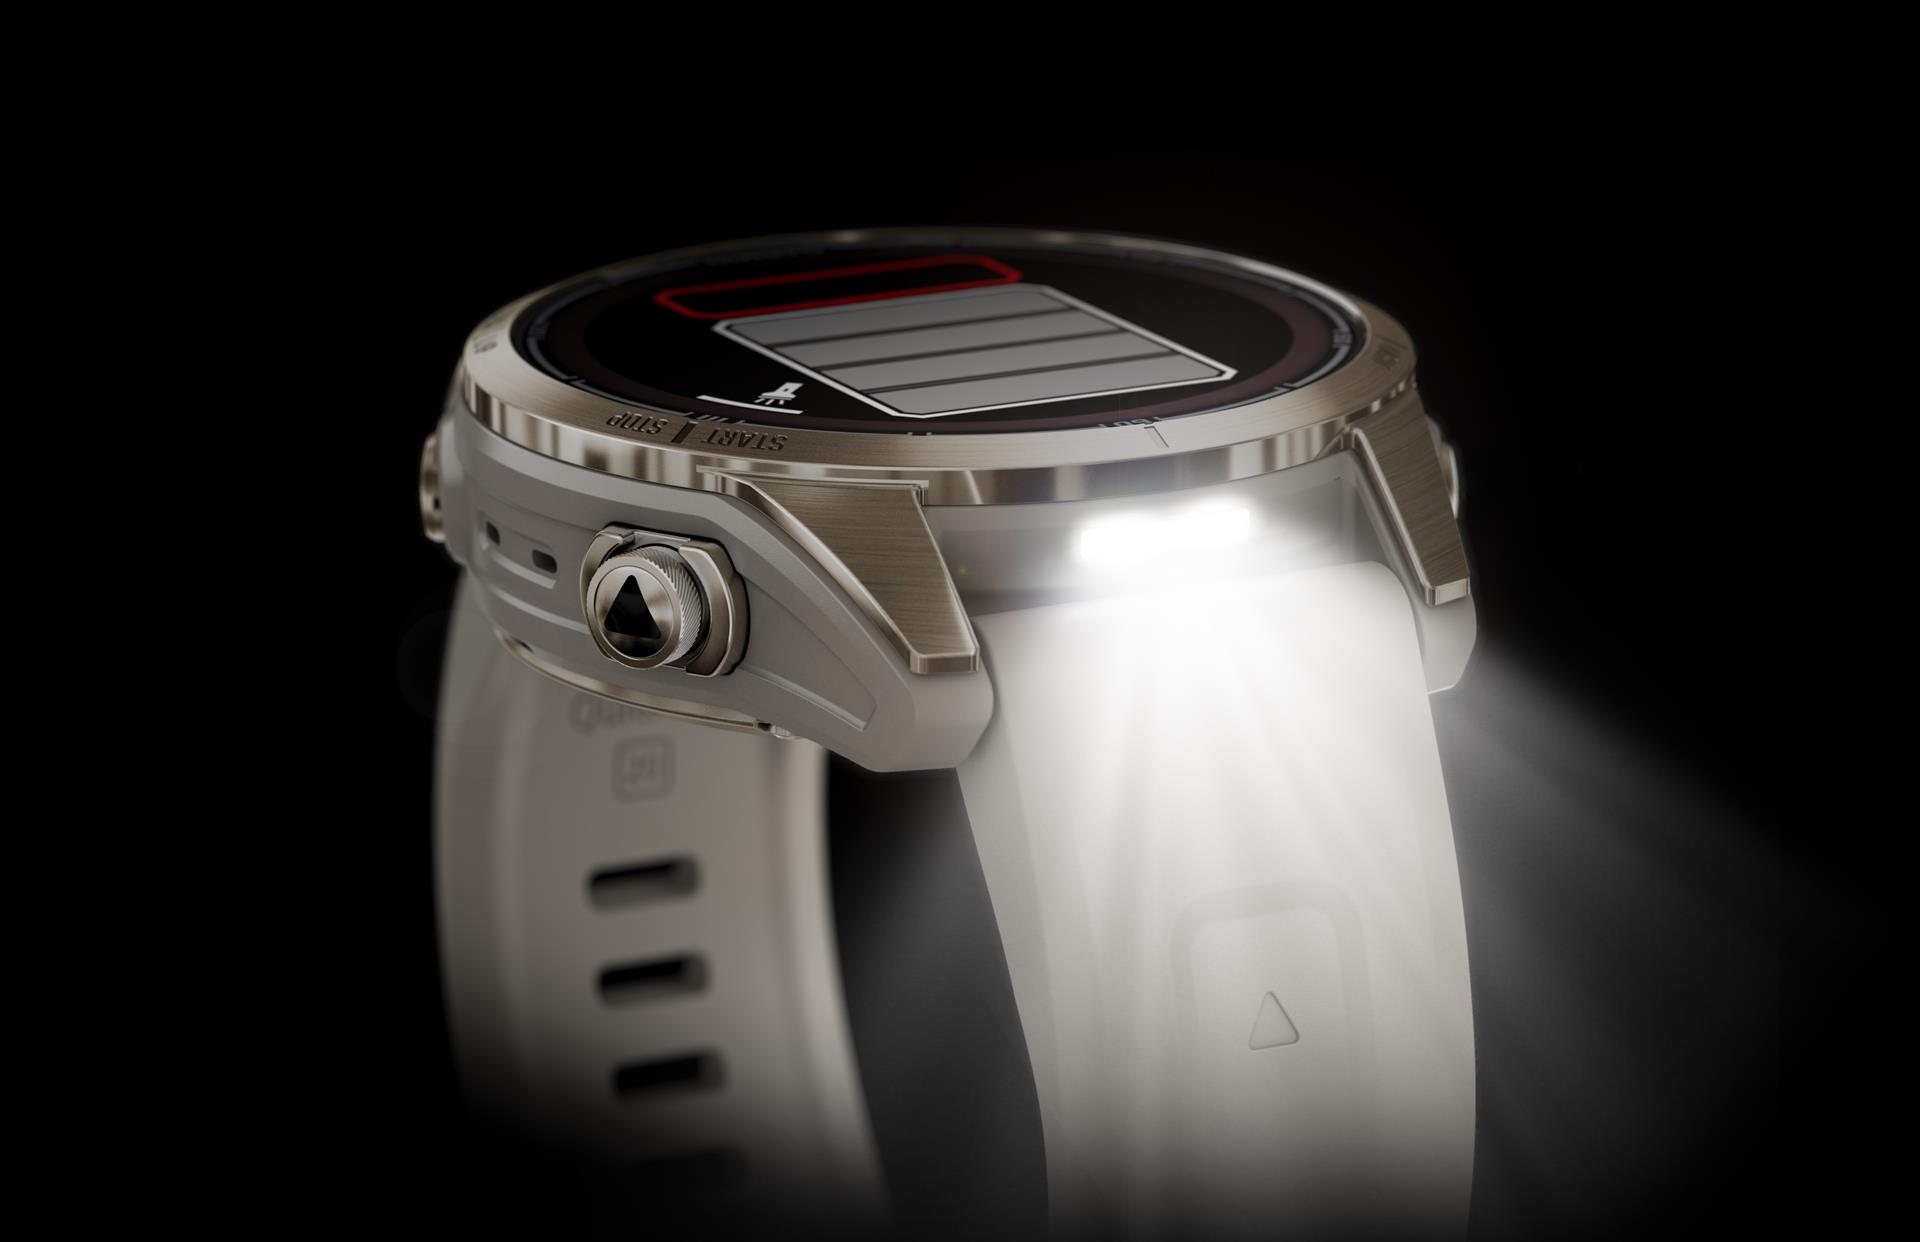 Garmin fēnix 7S Pro Sapphire Solar smartwatch, 42 mm, Soft gold/Sand